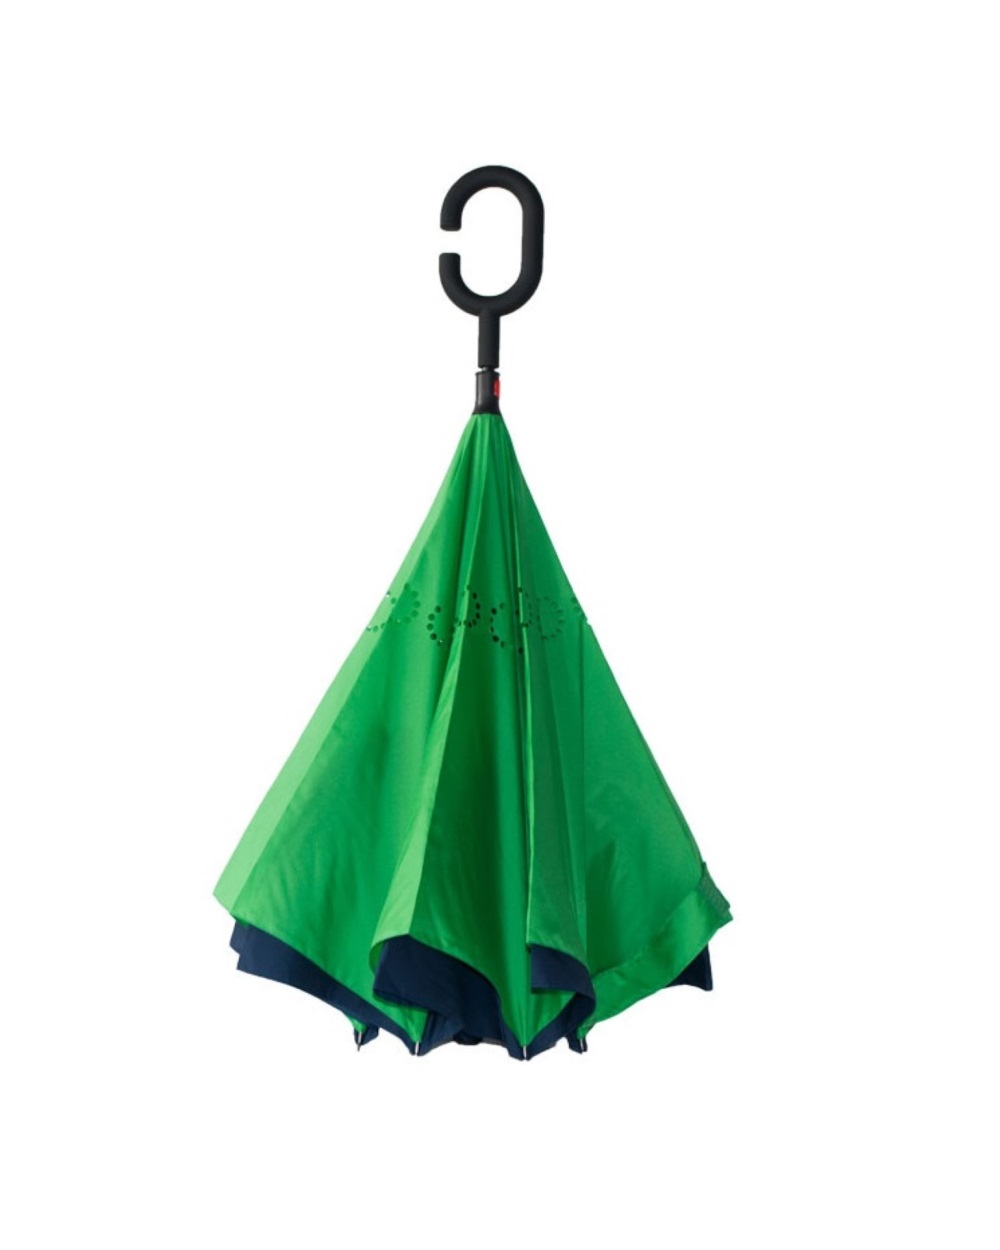 reverseumbrella green closed 1